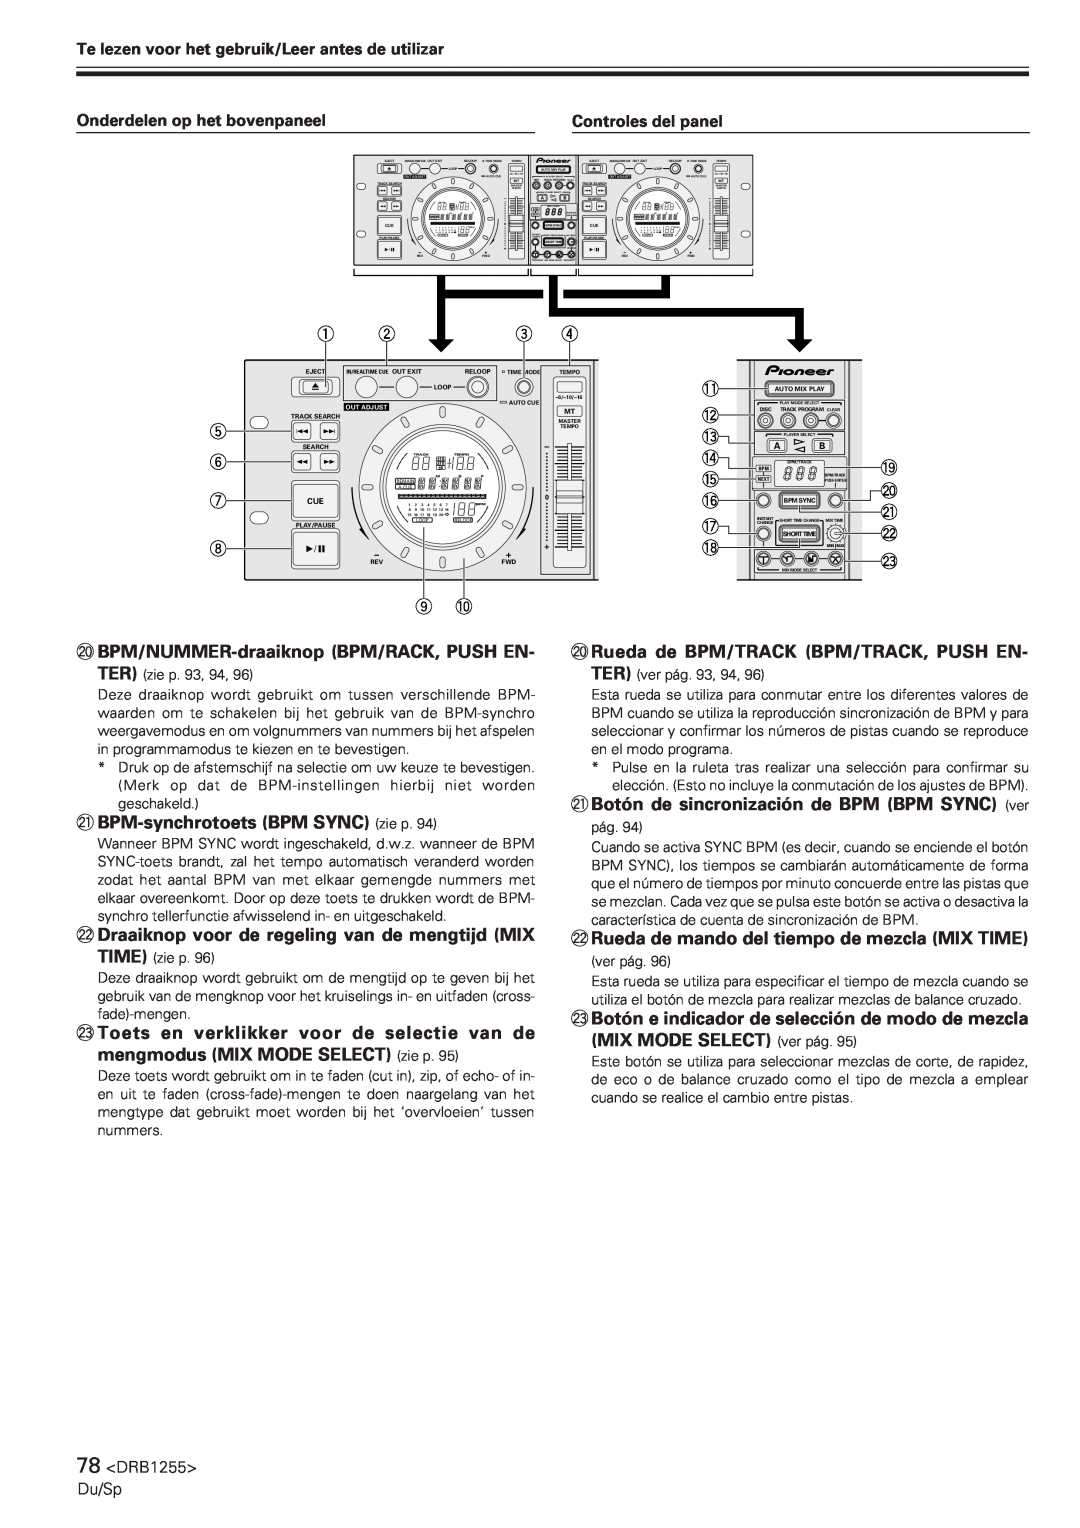 Pioneer CMX-5000 manual BPM/NUMMER-draaiknopBPM/RACK, PUSH EN 